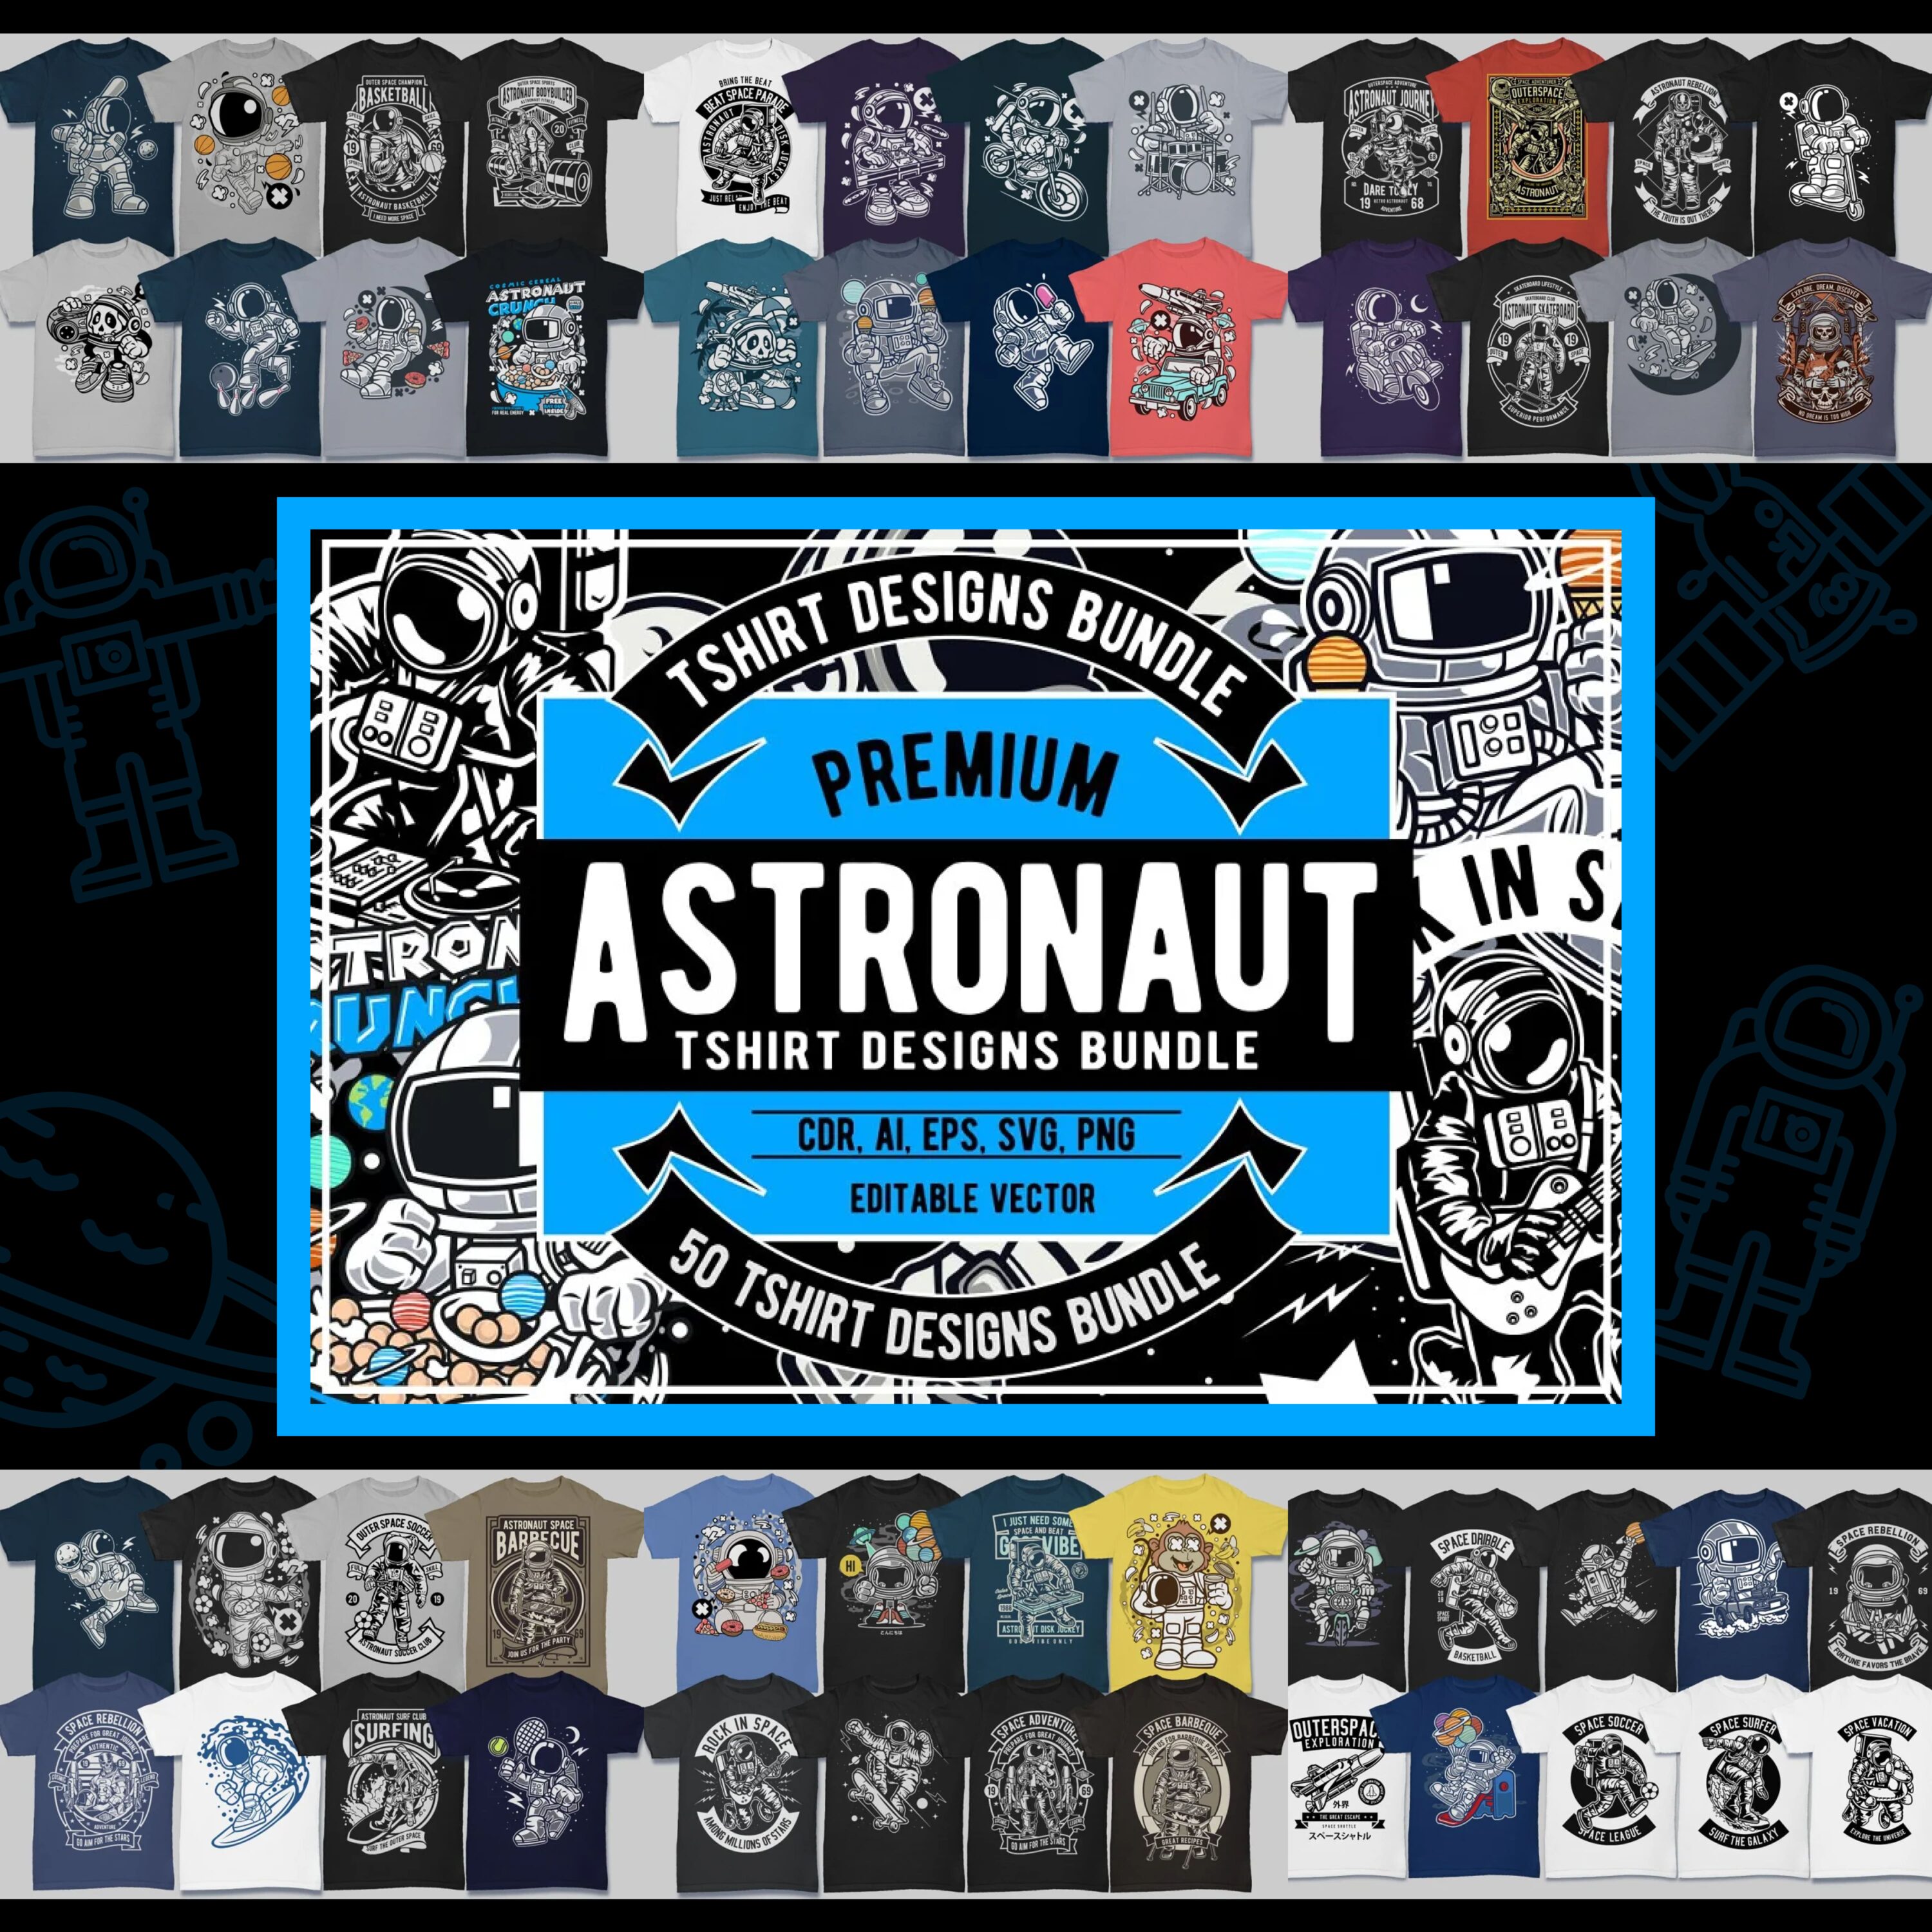 50 Astronaut Tshirt Designs Bundle cover image.